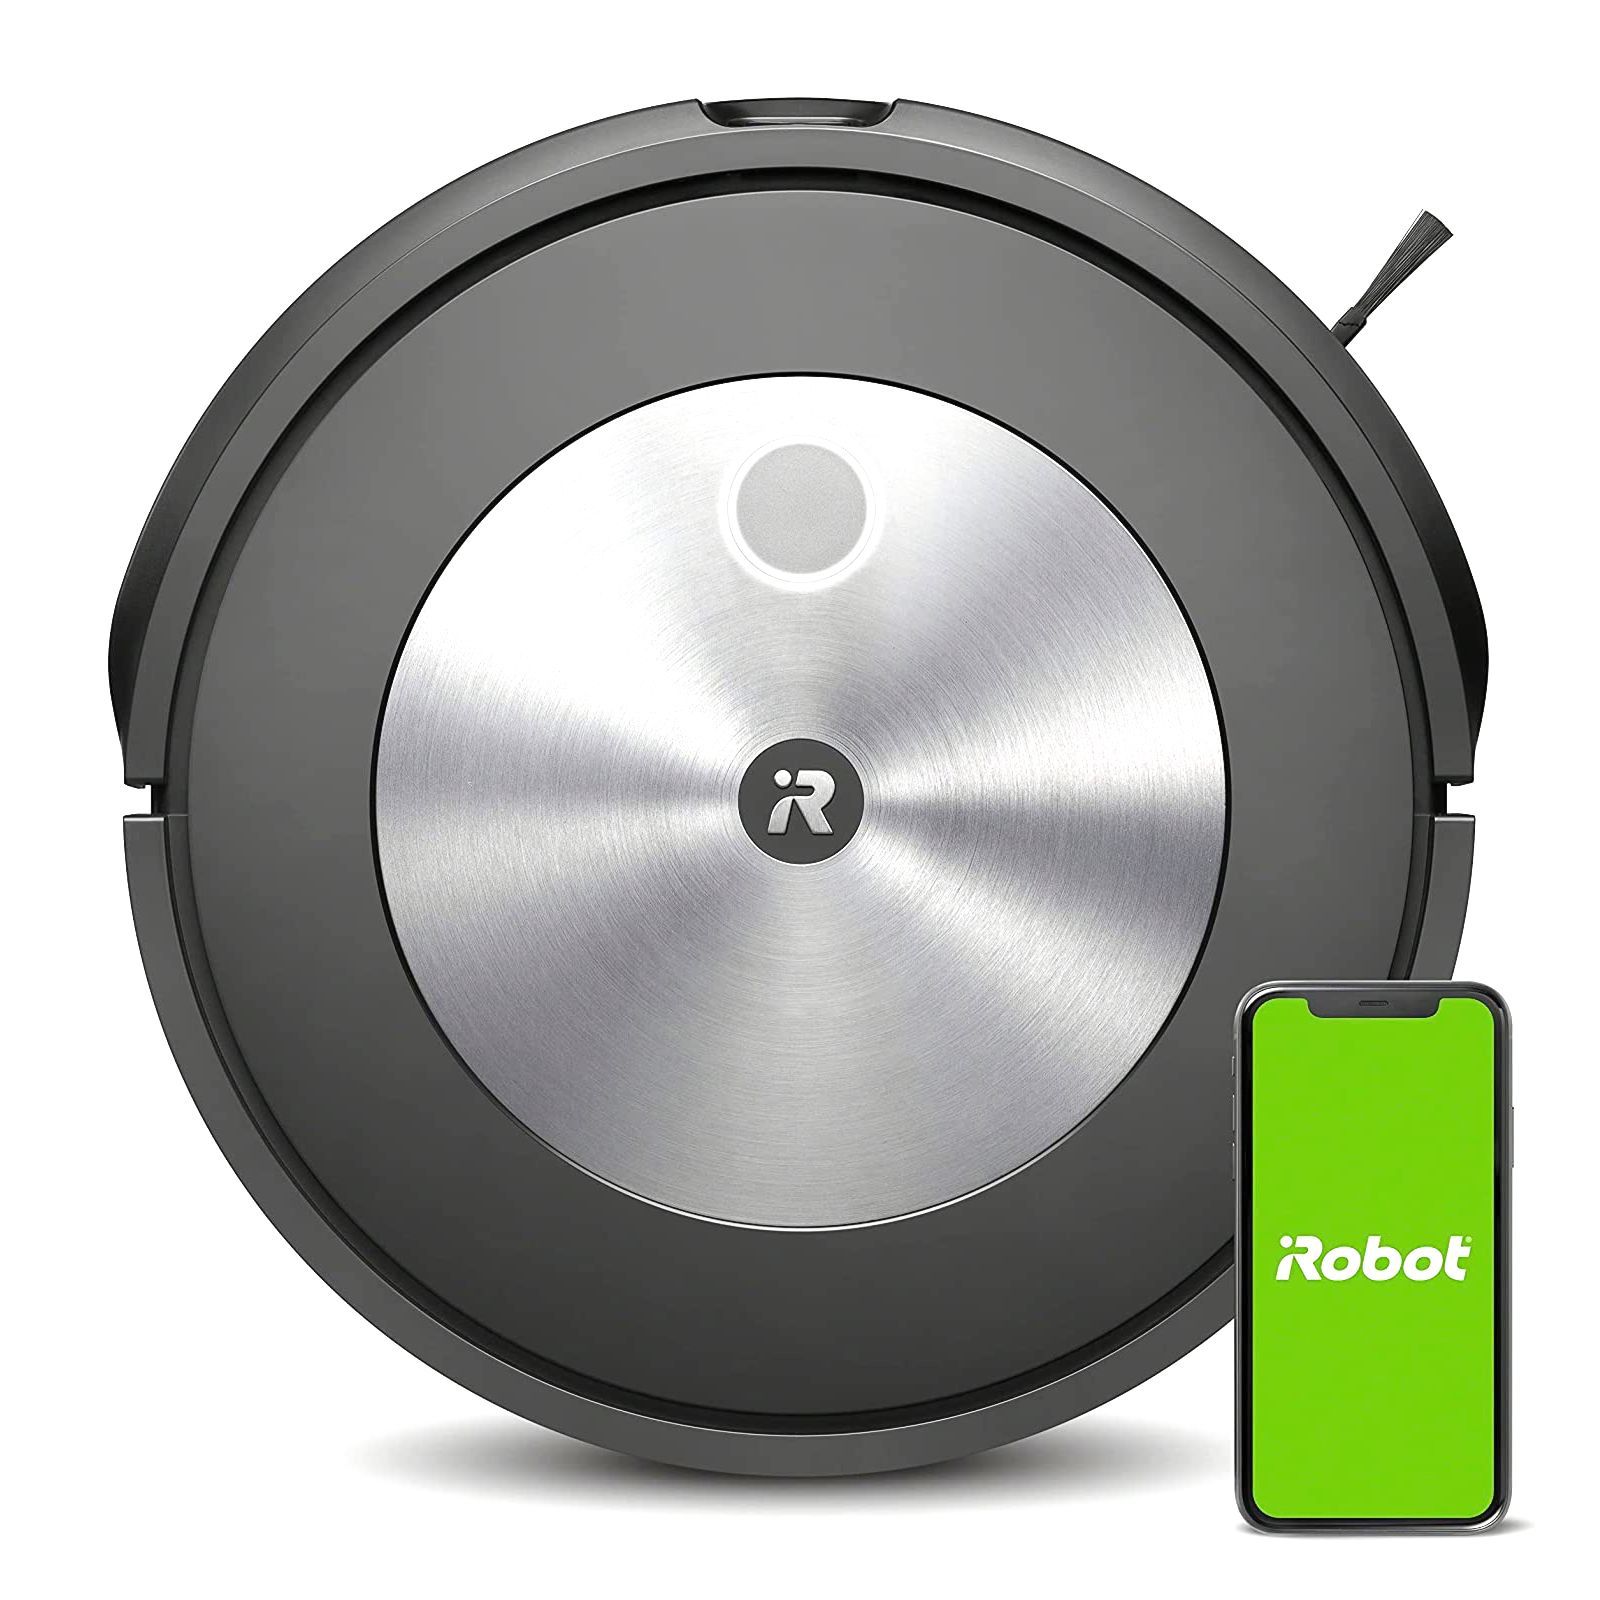 Roomba j7 (7150) Robot Vacuum